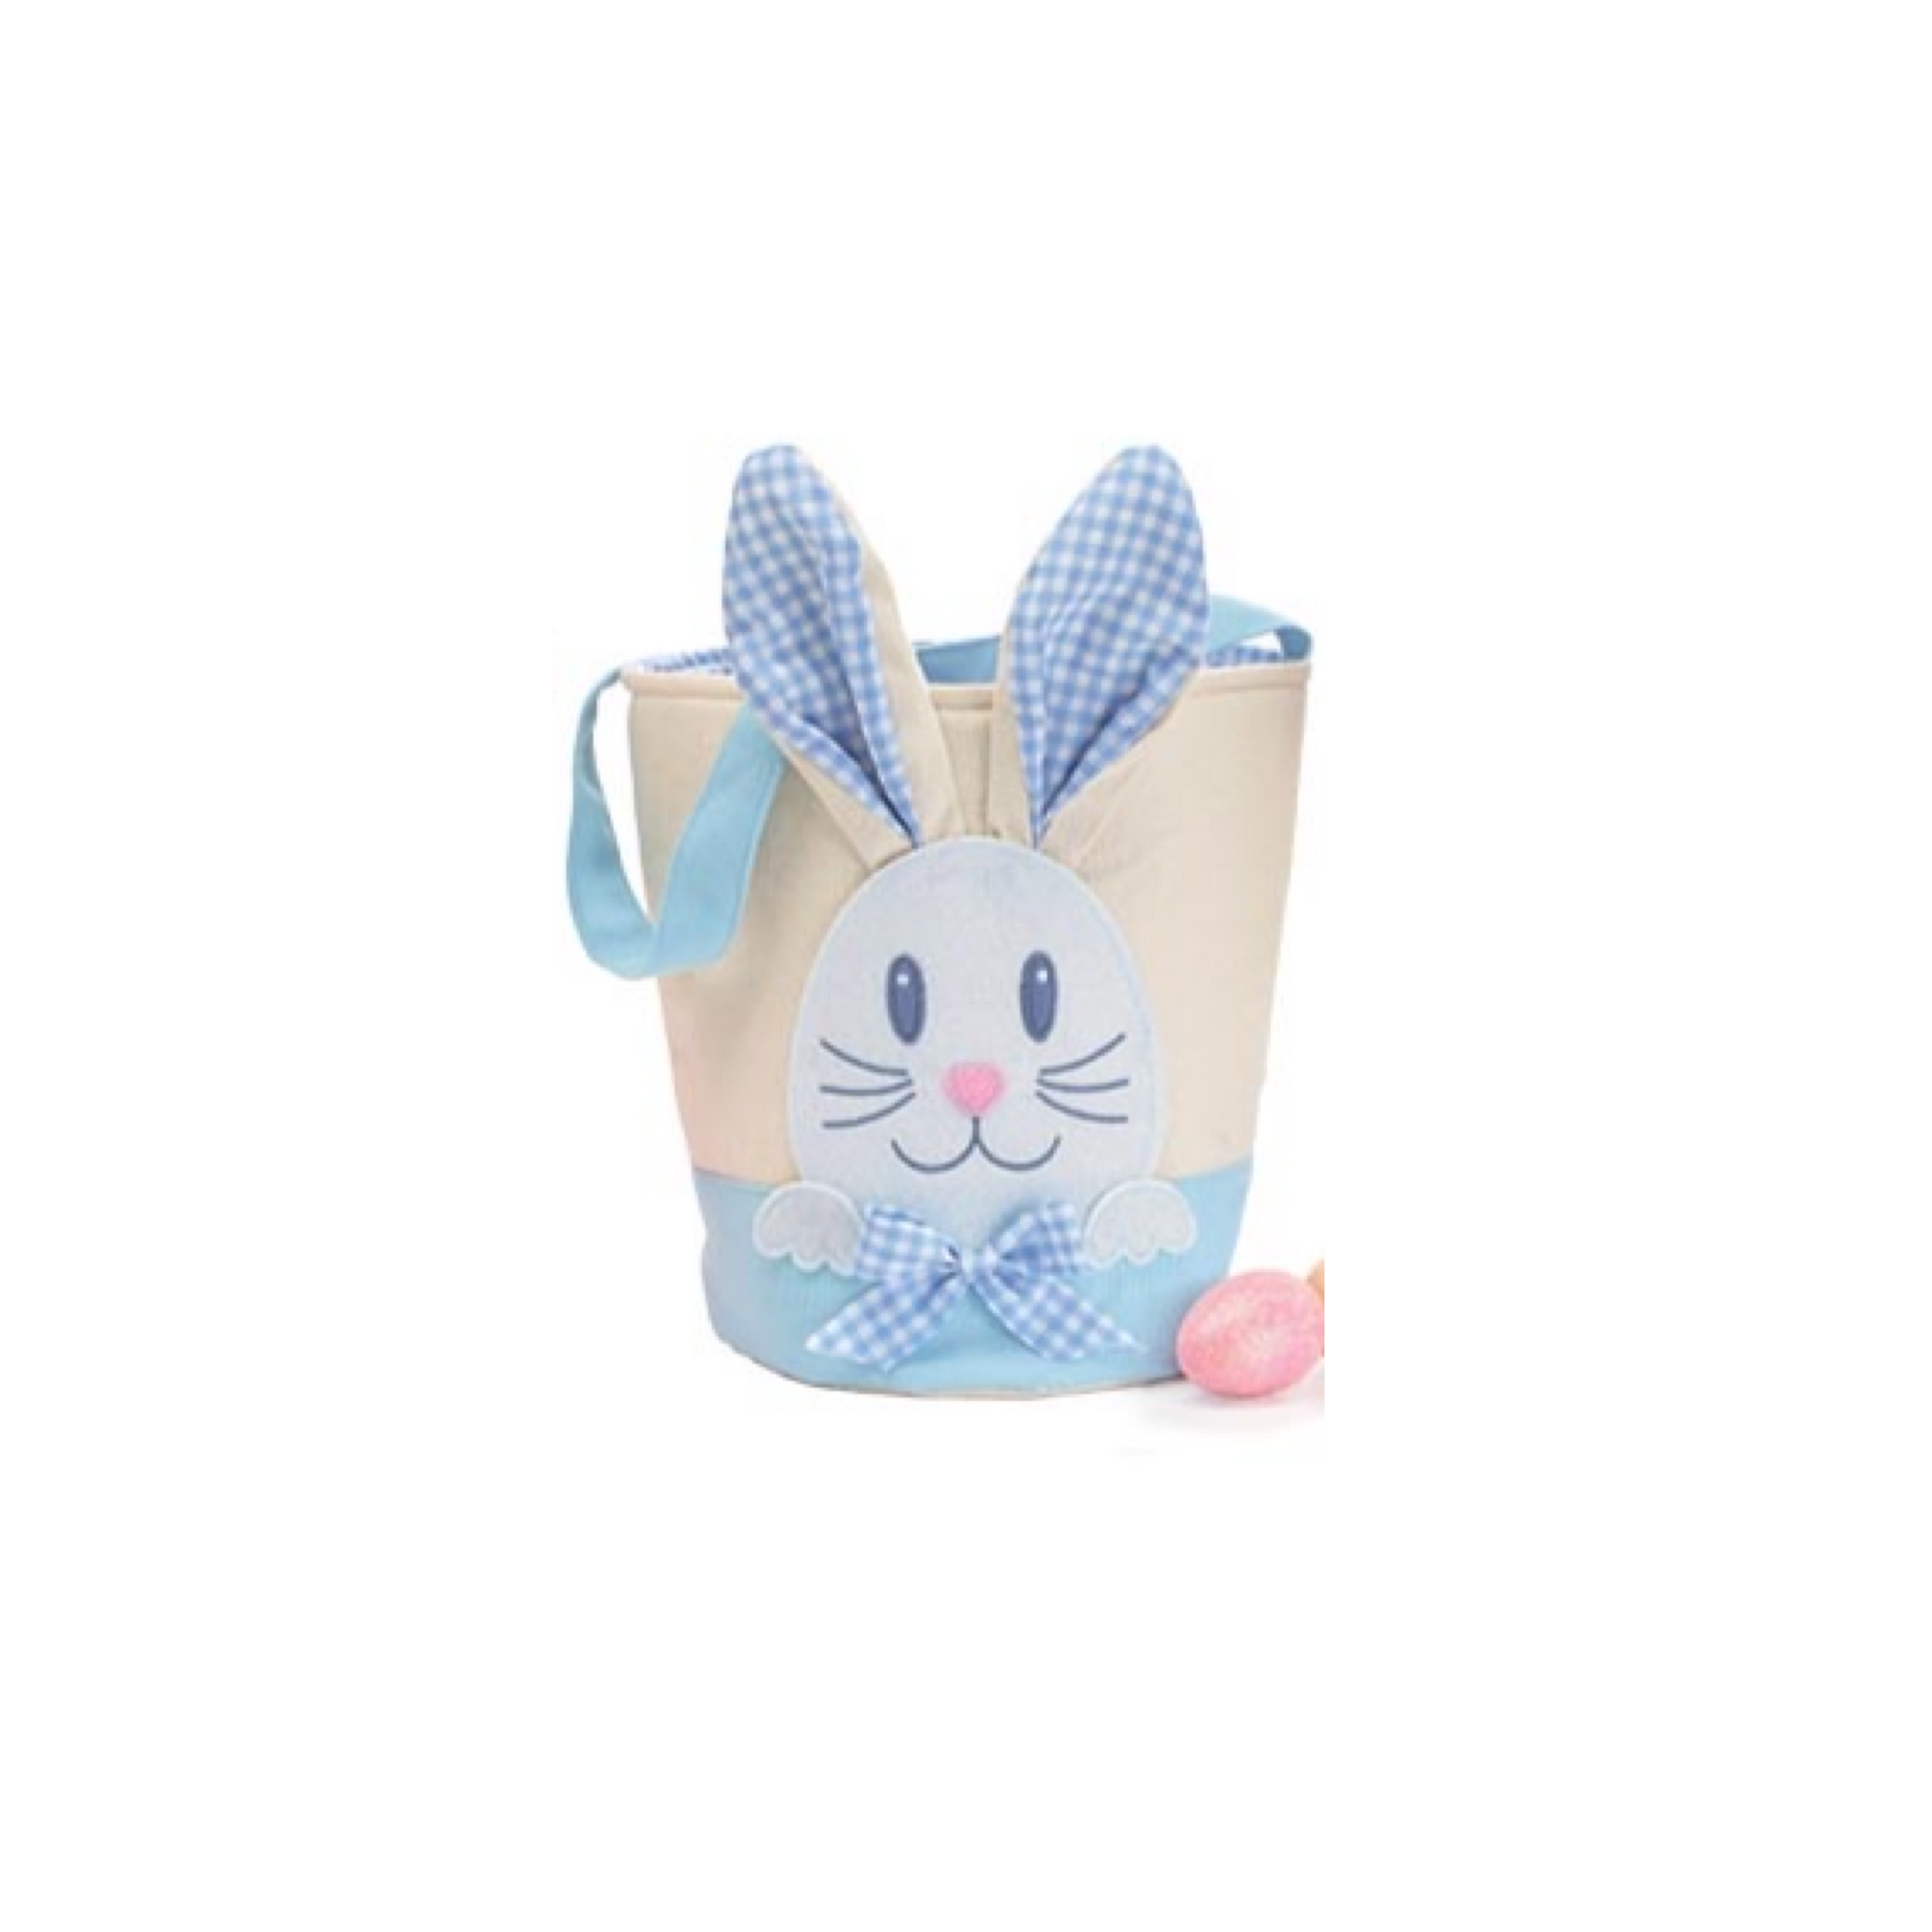 Soft Bunny Easter Baskets